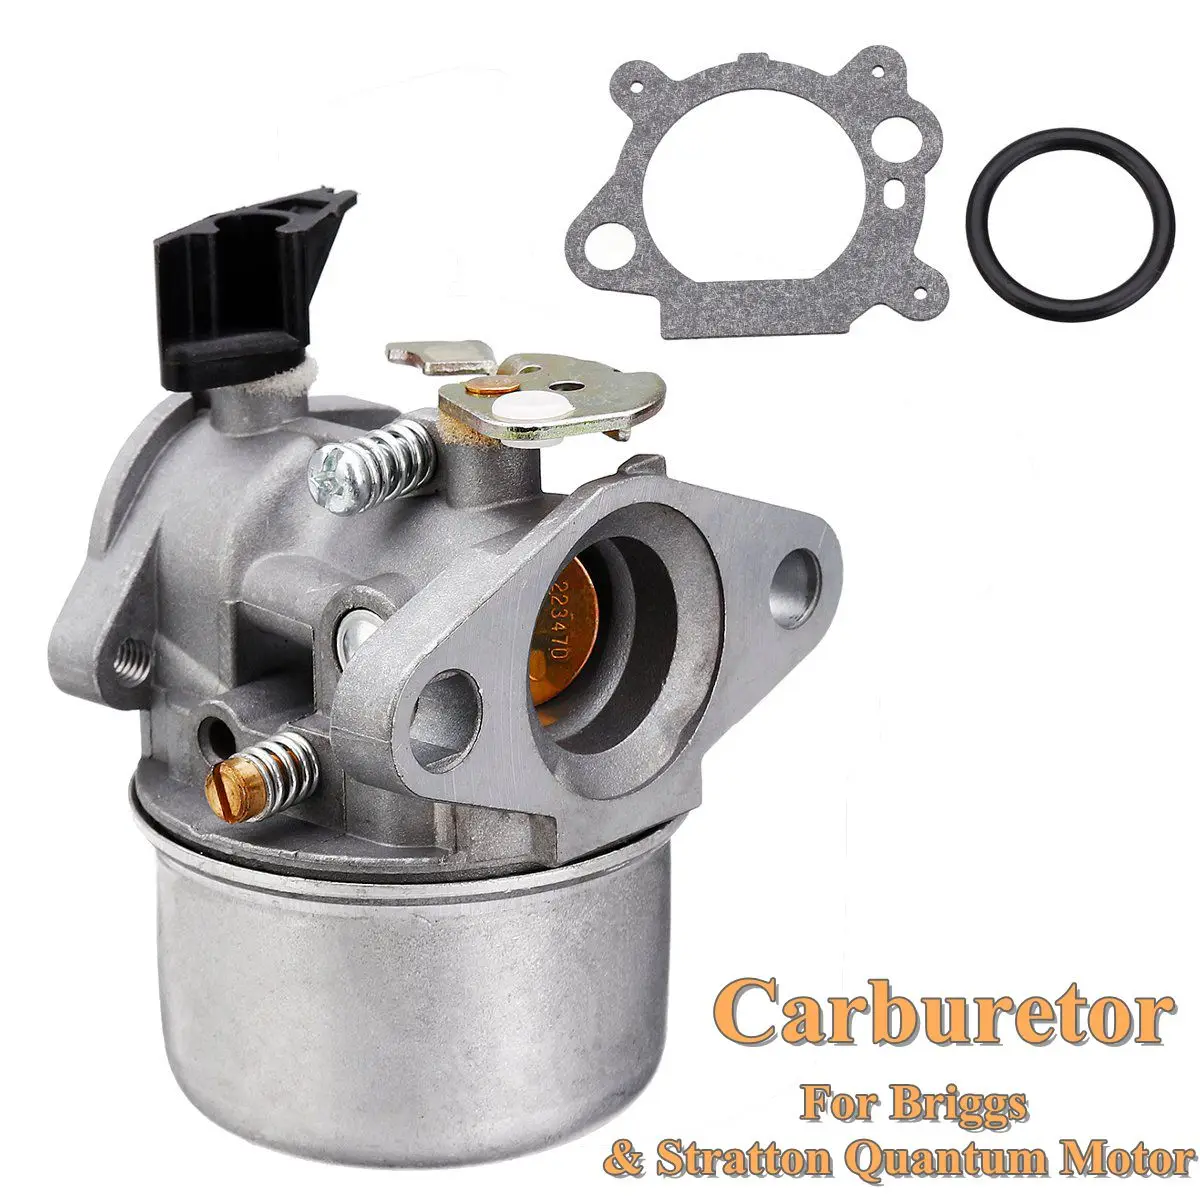 

1 Pcs Choke Vergaser carburateur carburetor Briggs Stratton Quantum Motor 498965 with Gasket and Rubber Ring